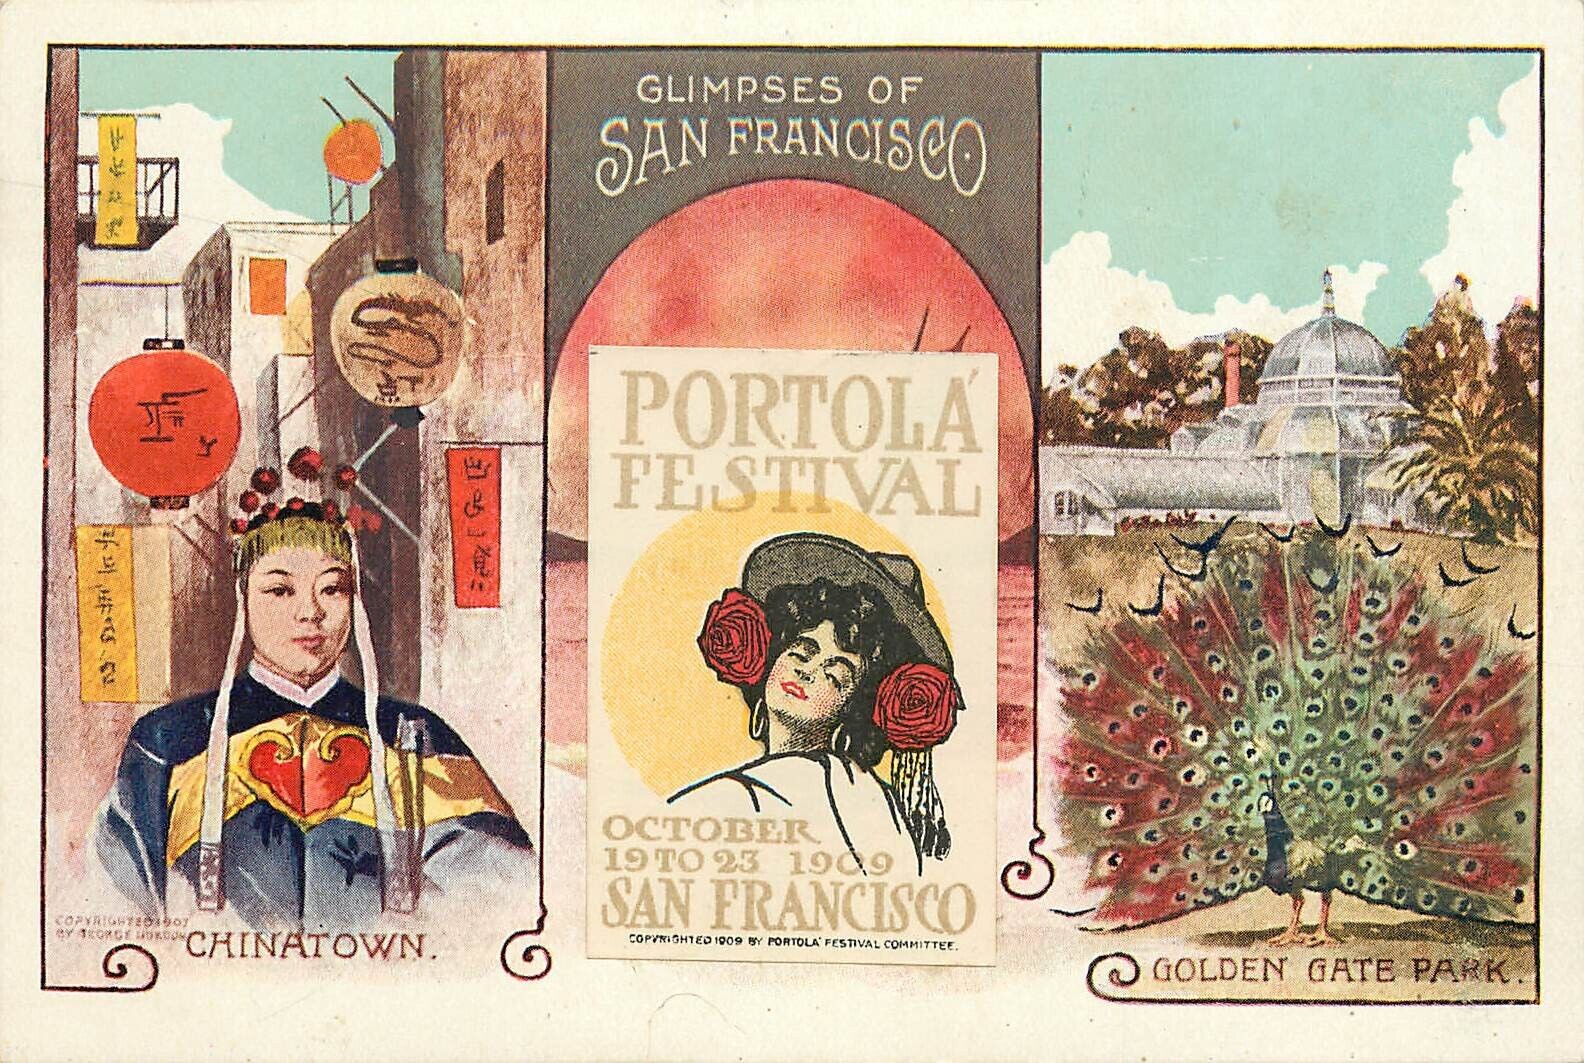 Portola Festival Postcard Glimpses Of San Francisco 1909 Chinatown Golden Gate